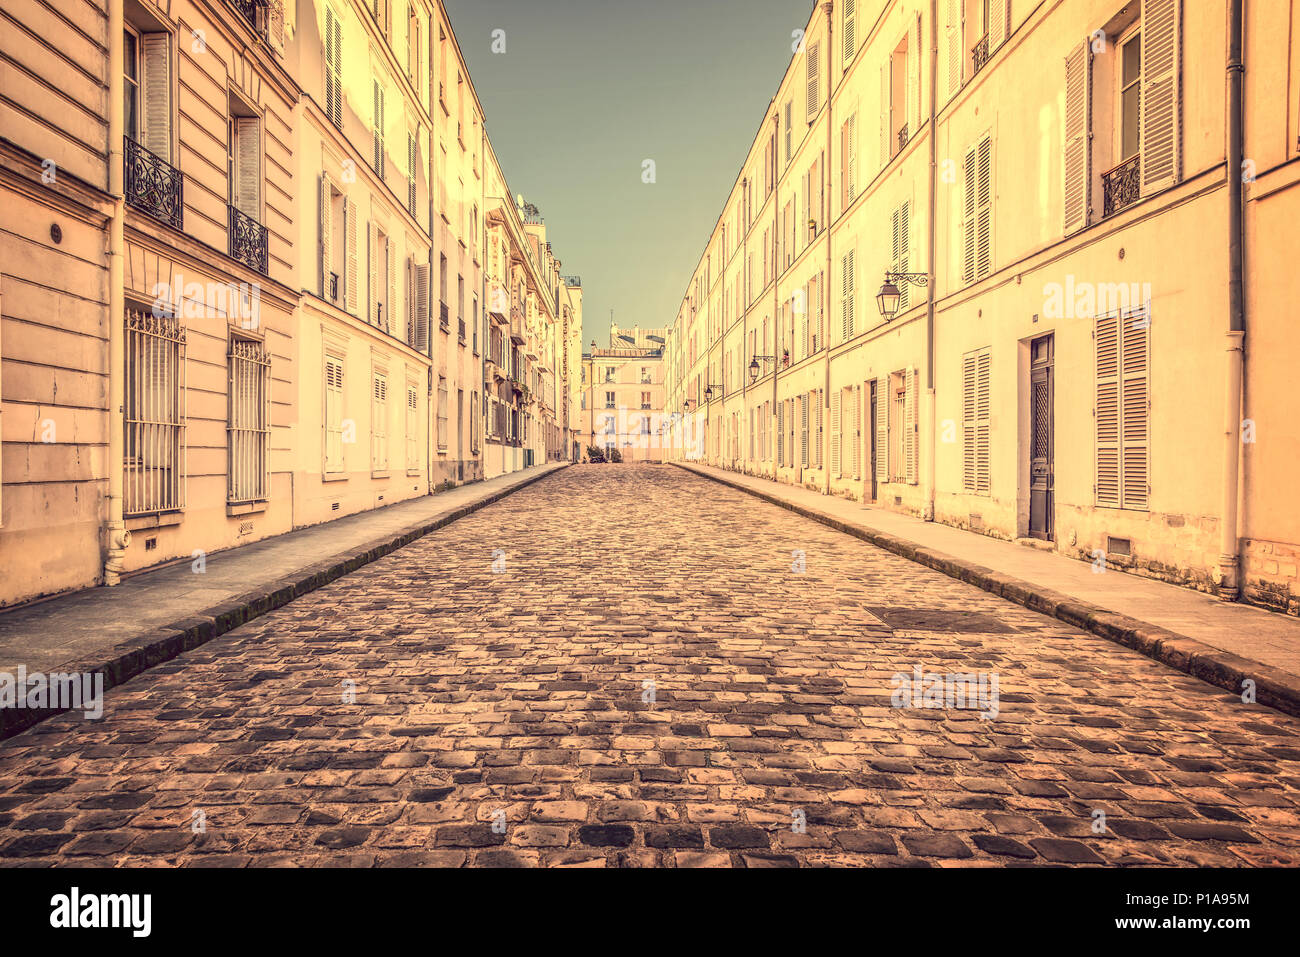 La pintoresca calle adoquinada en París, Francia Foto de stock